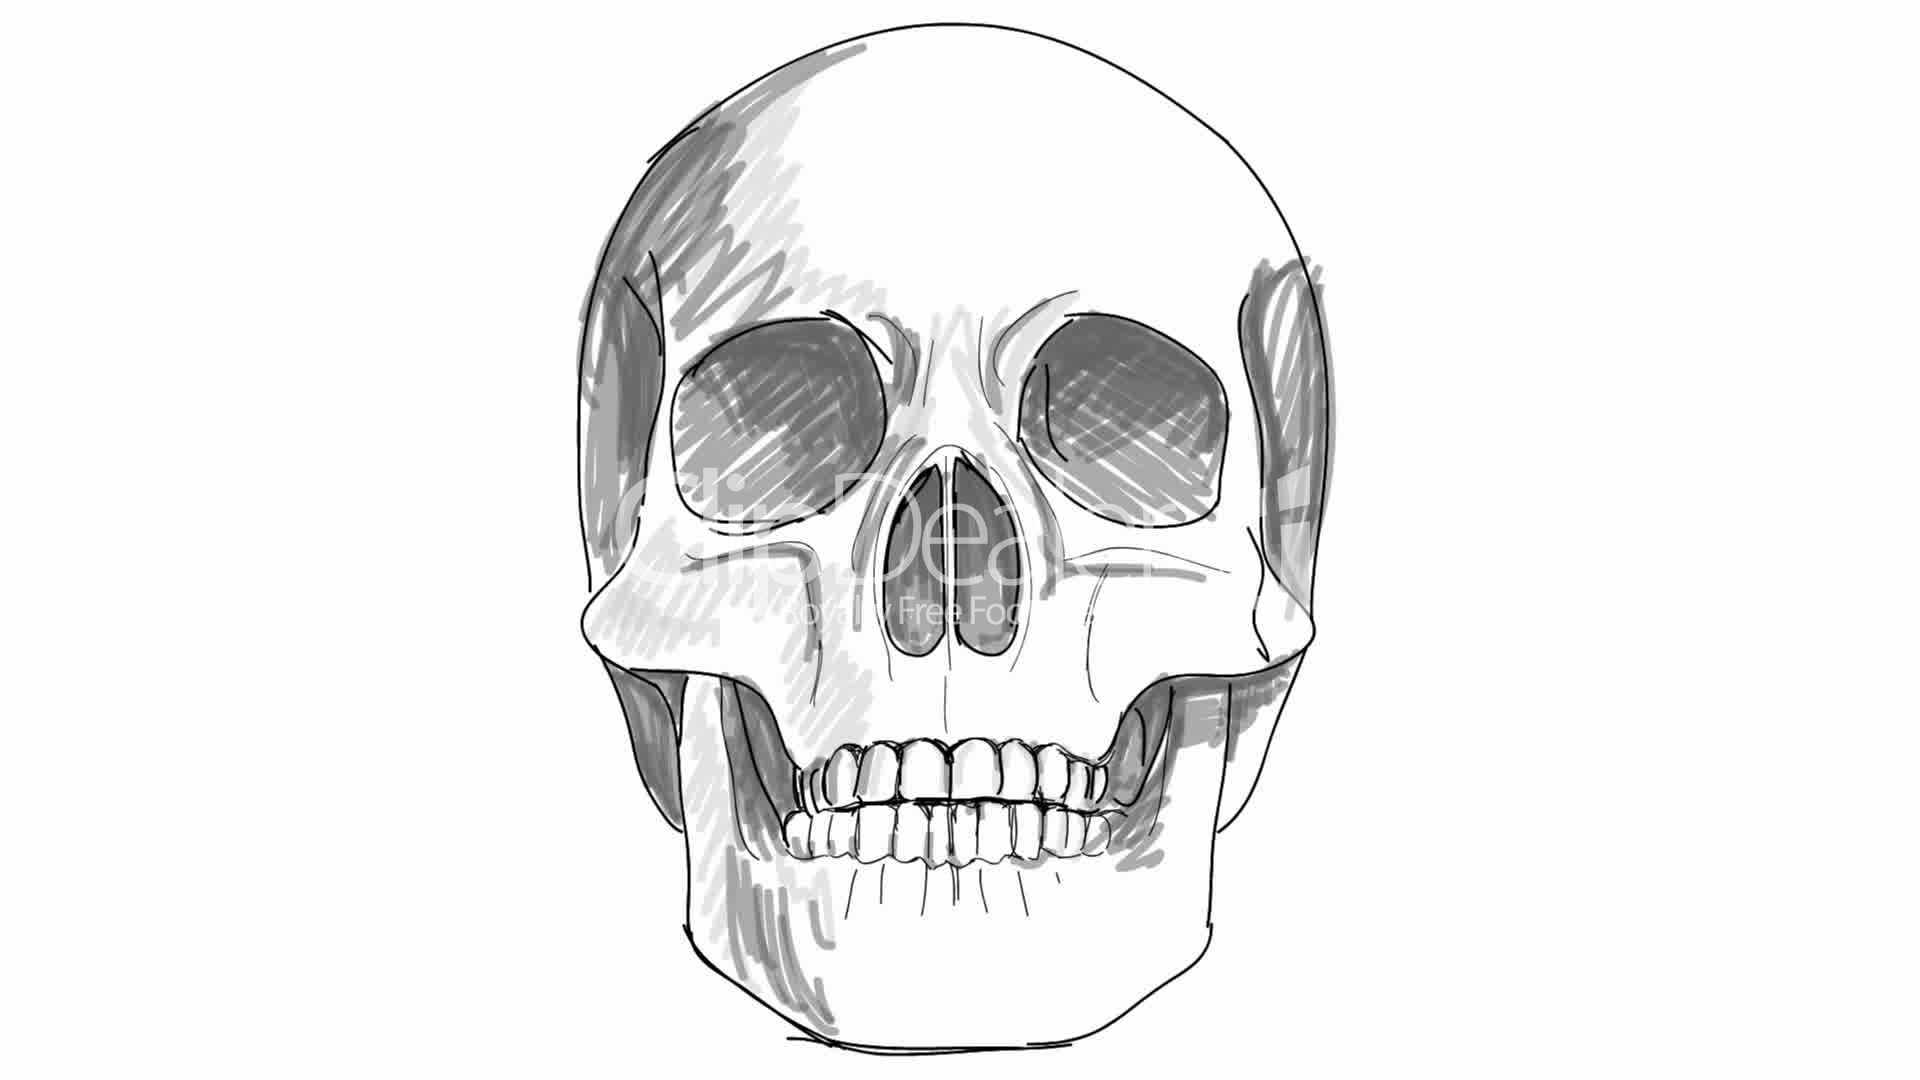 http://en.clipdealer.com/preview/image/000/785/757/previews/11--785757-skull%20sketch.jpg